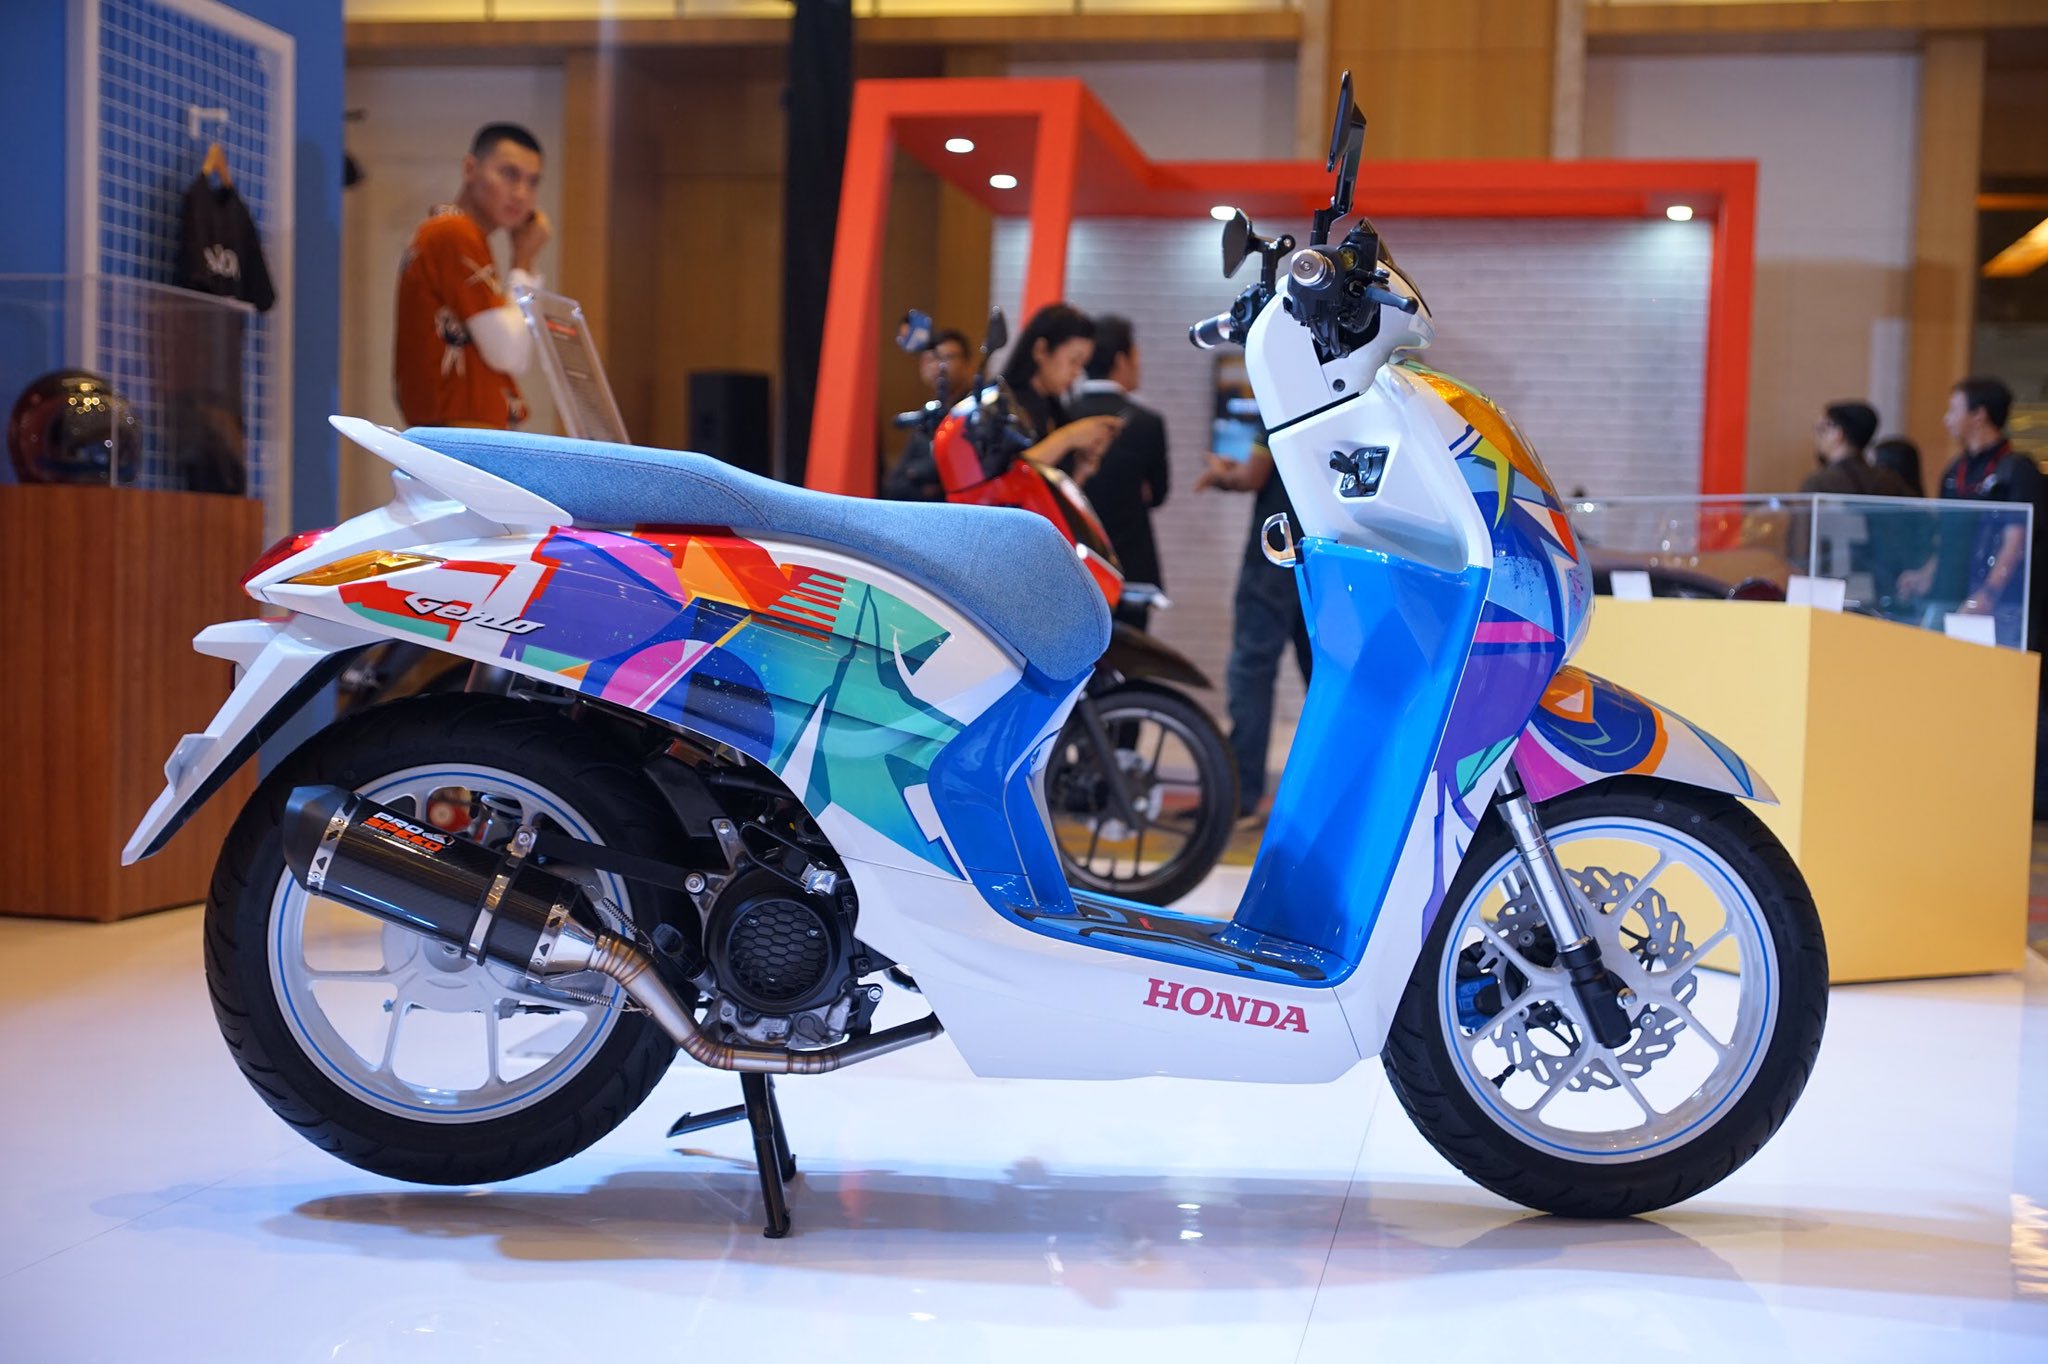 Konsep modifikasi Honda Genio tahun 2019, monggo diintips ...